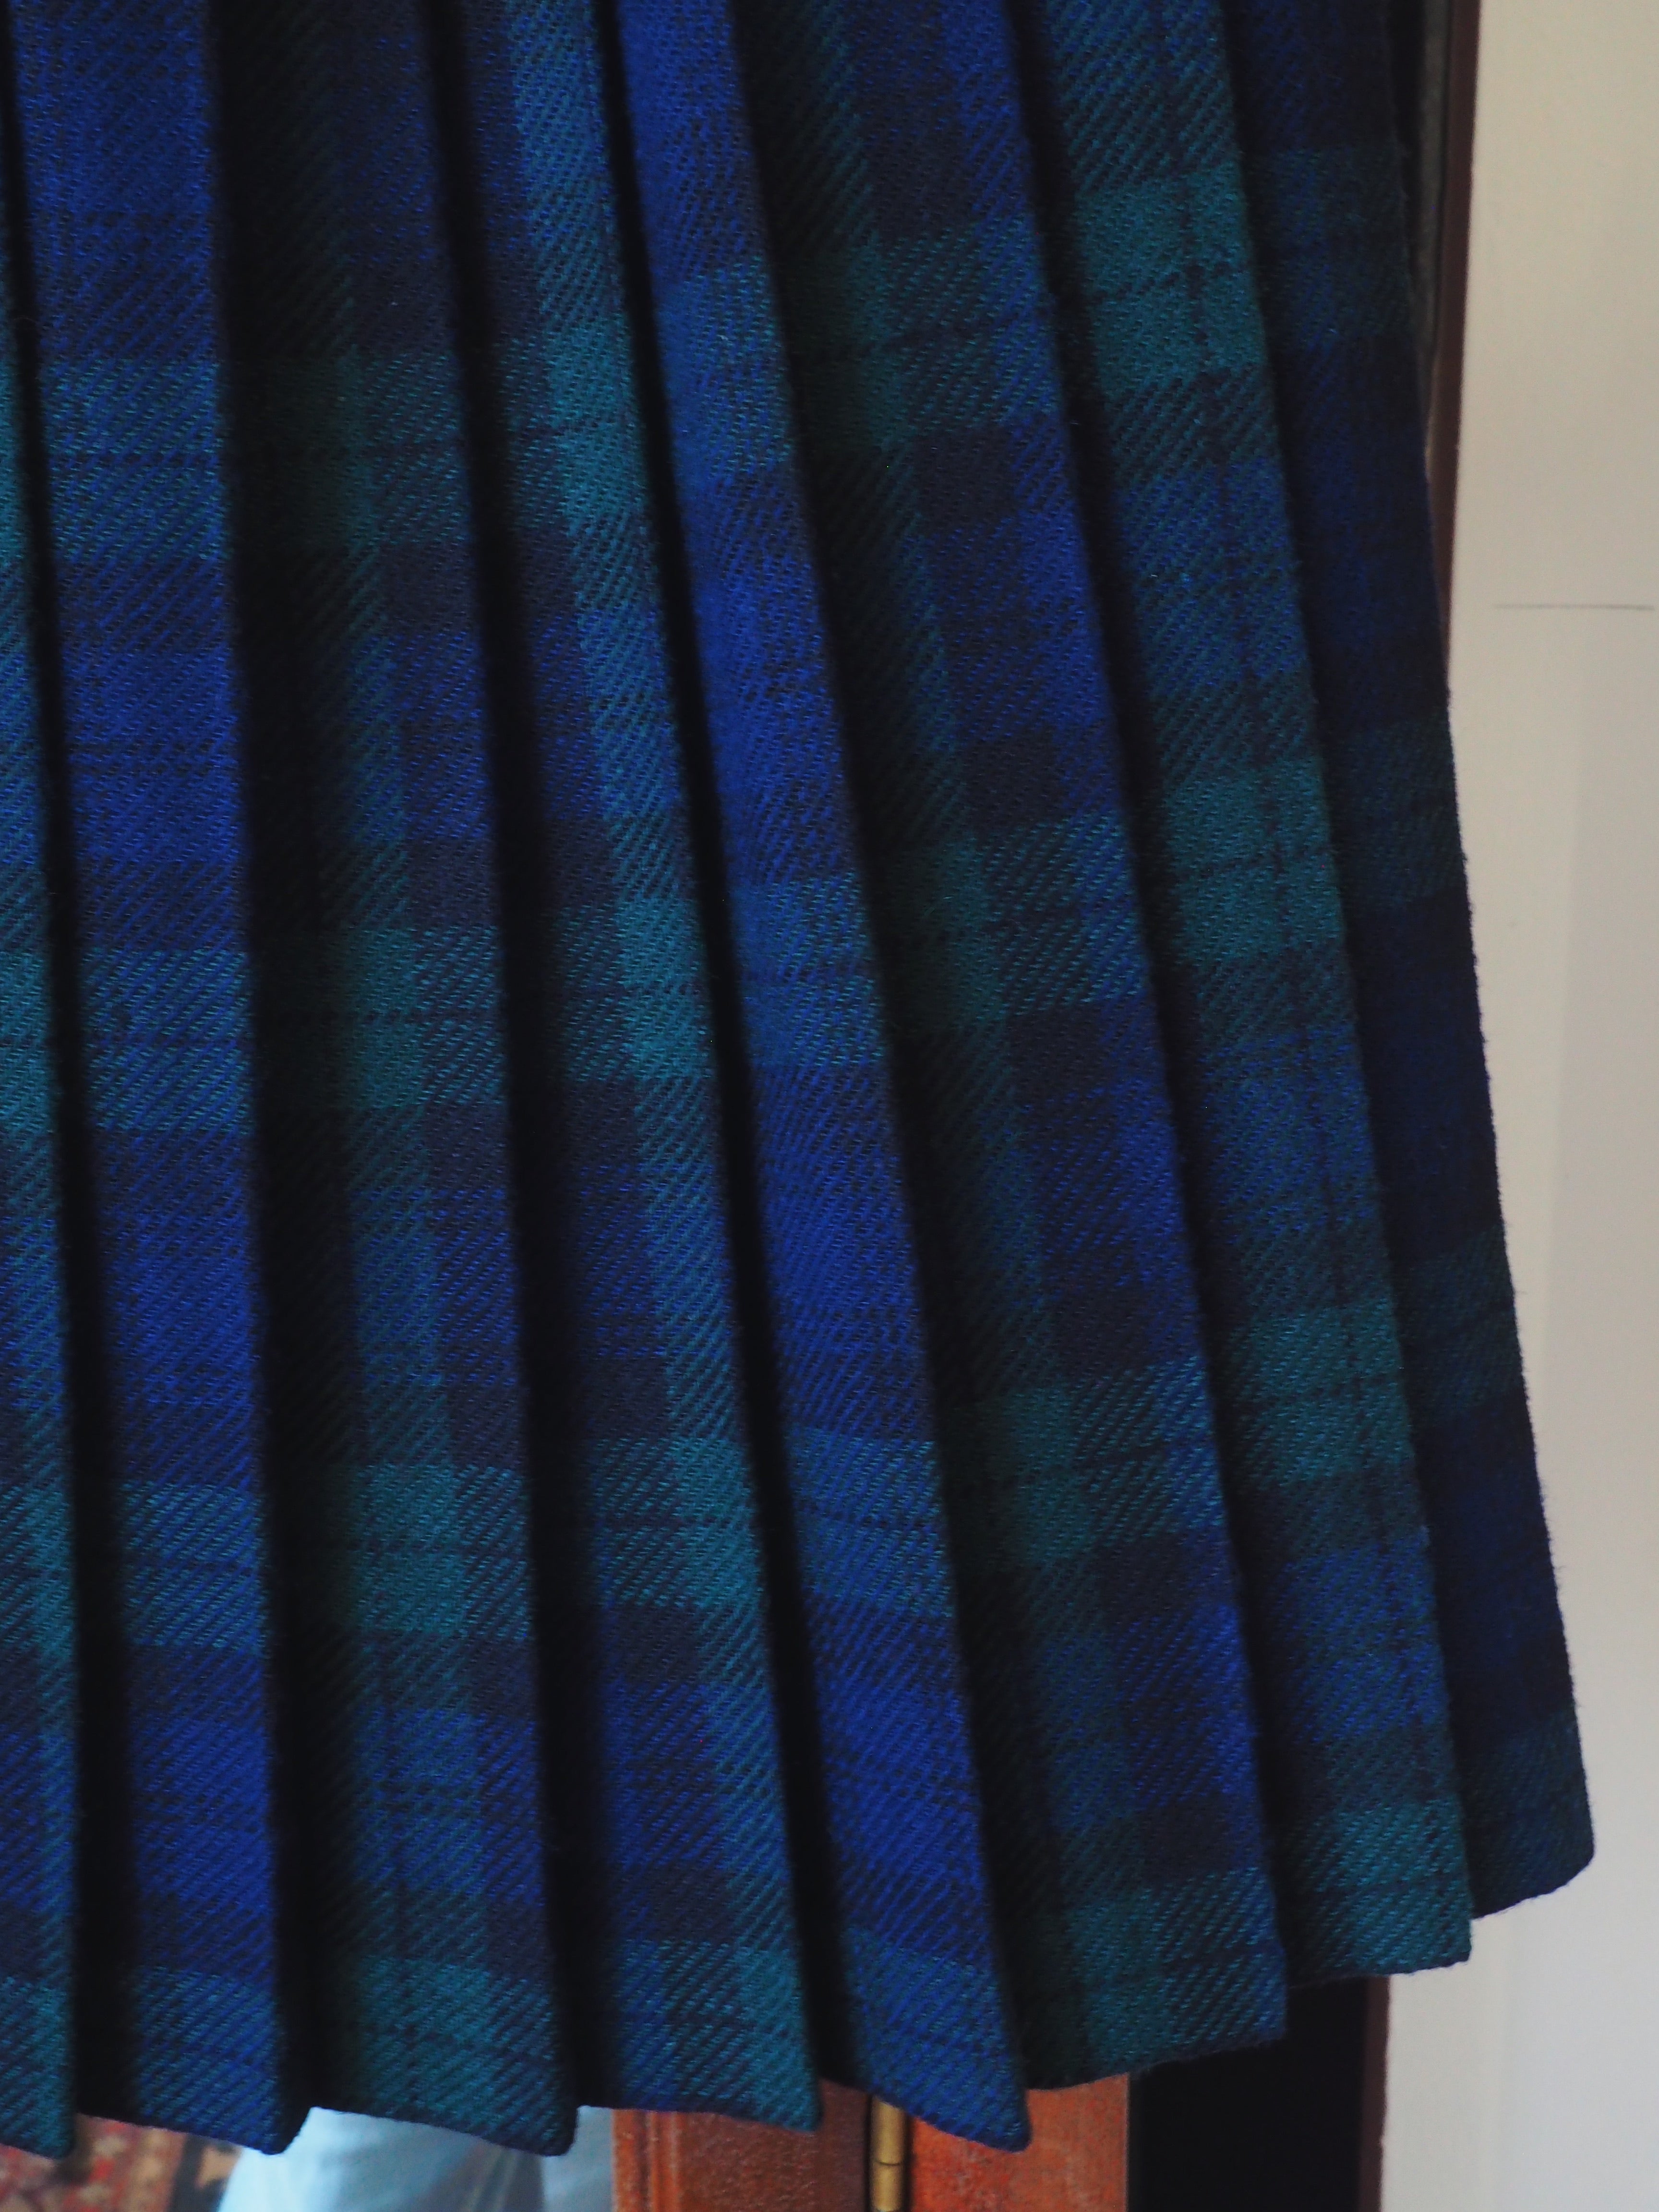 Navy and Green Scottish Tartan Skirt